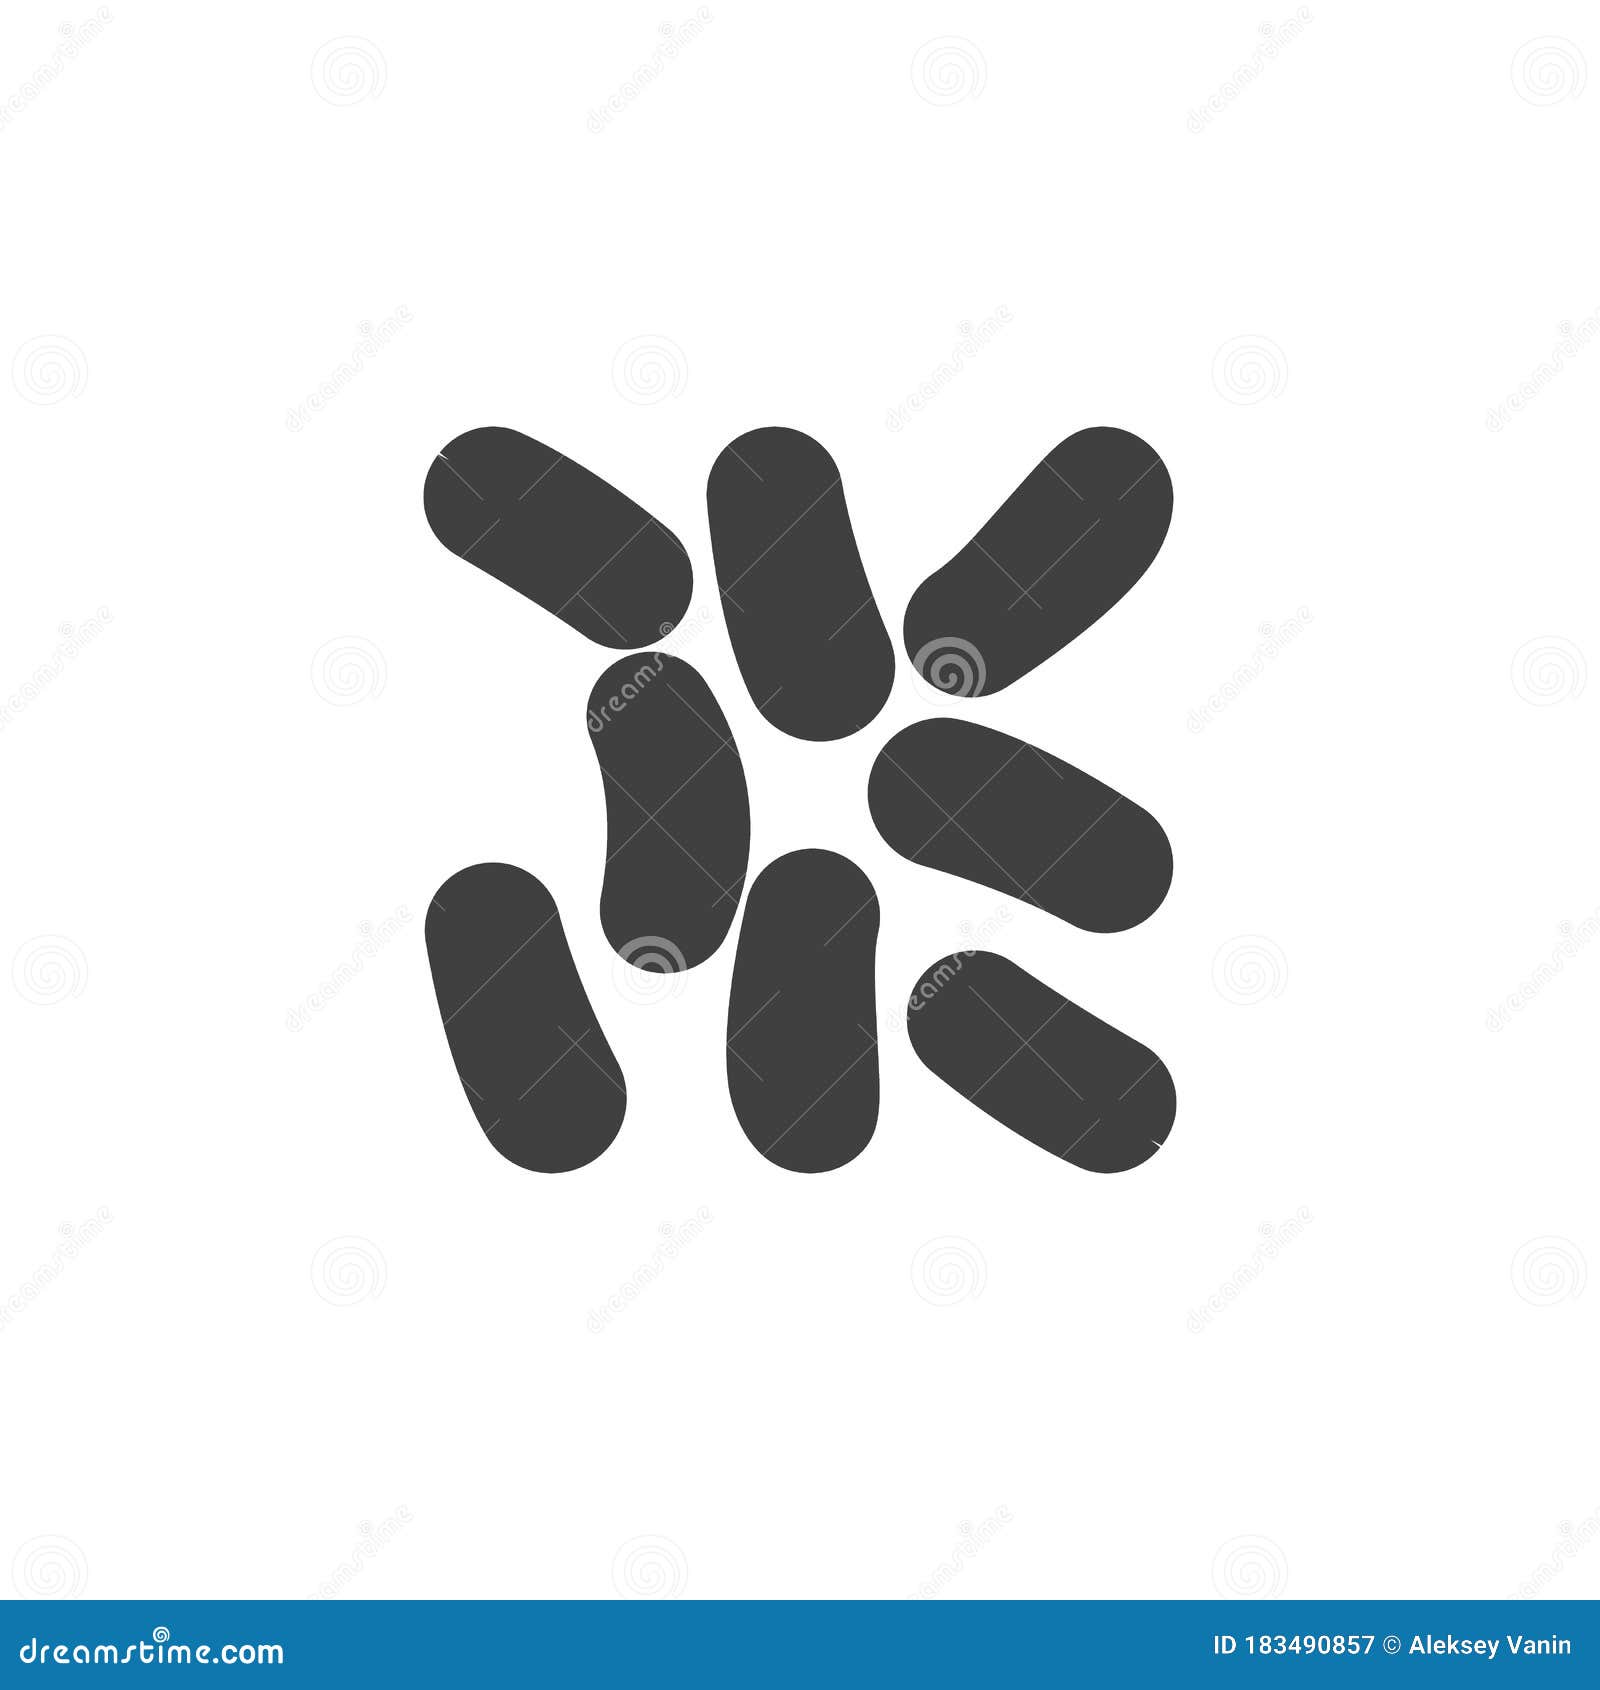 enterobacteria cell  icon